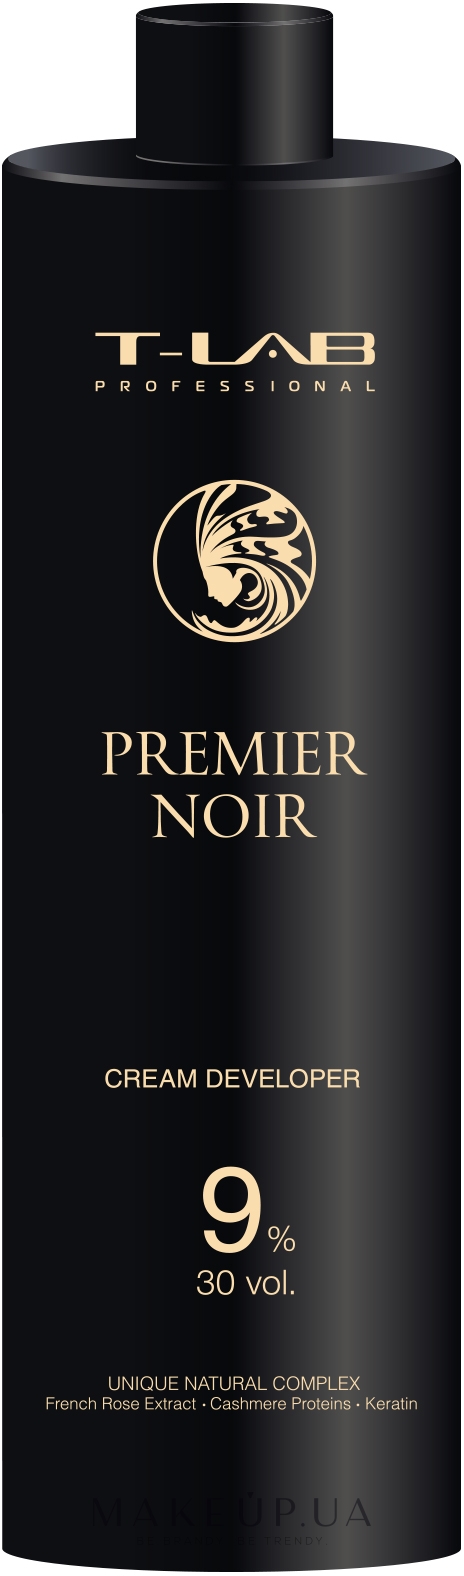 Крем-проявитель 9% - T-LAB Professional Premier Noir Cream Developer 30 vol. 9% — фото 1000ml